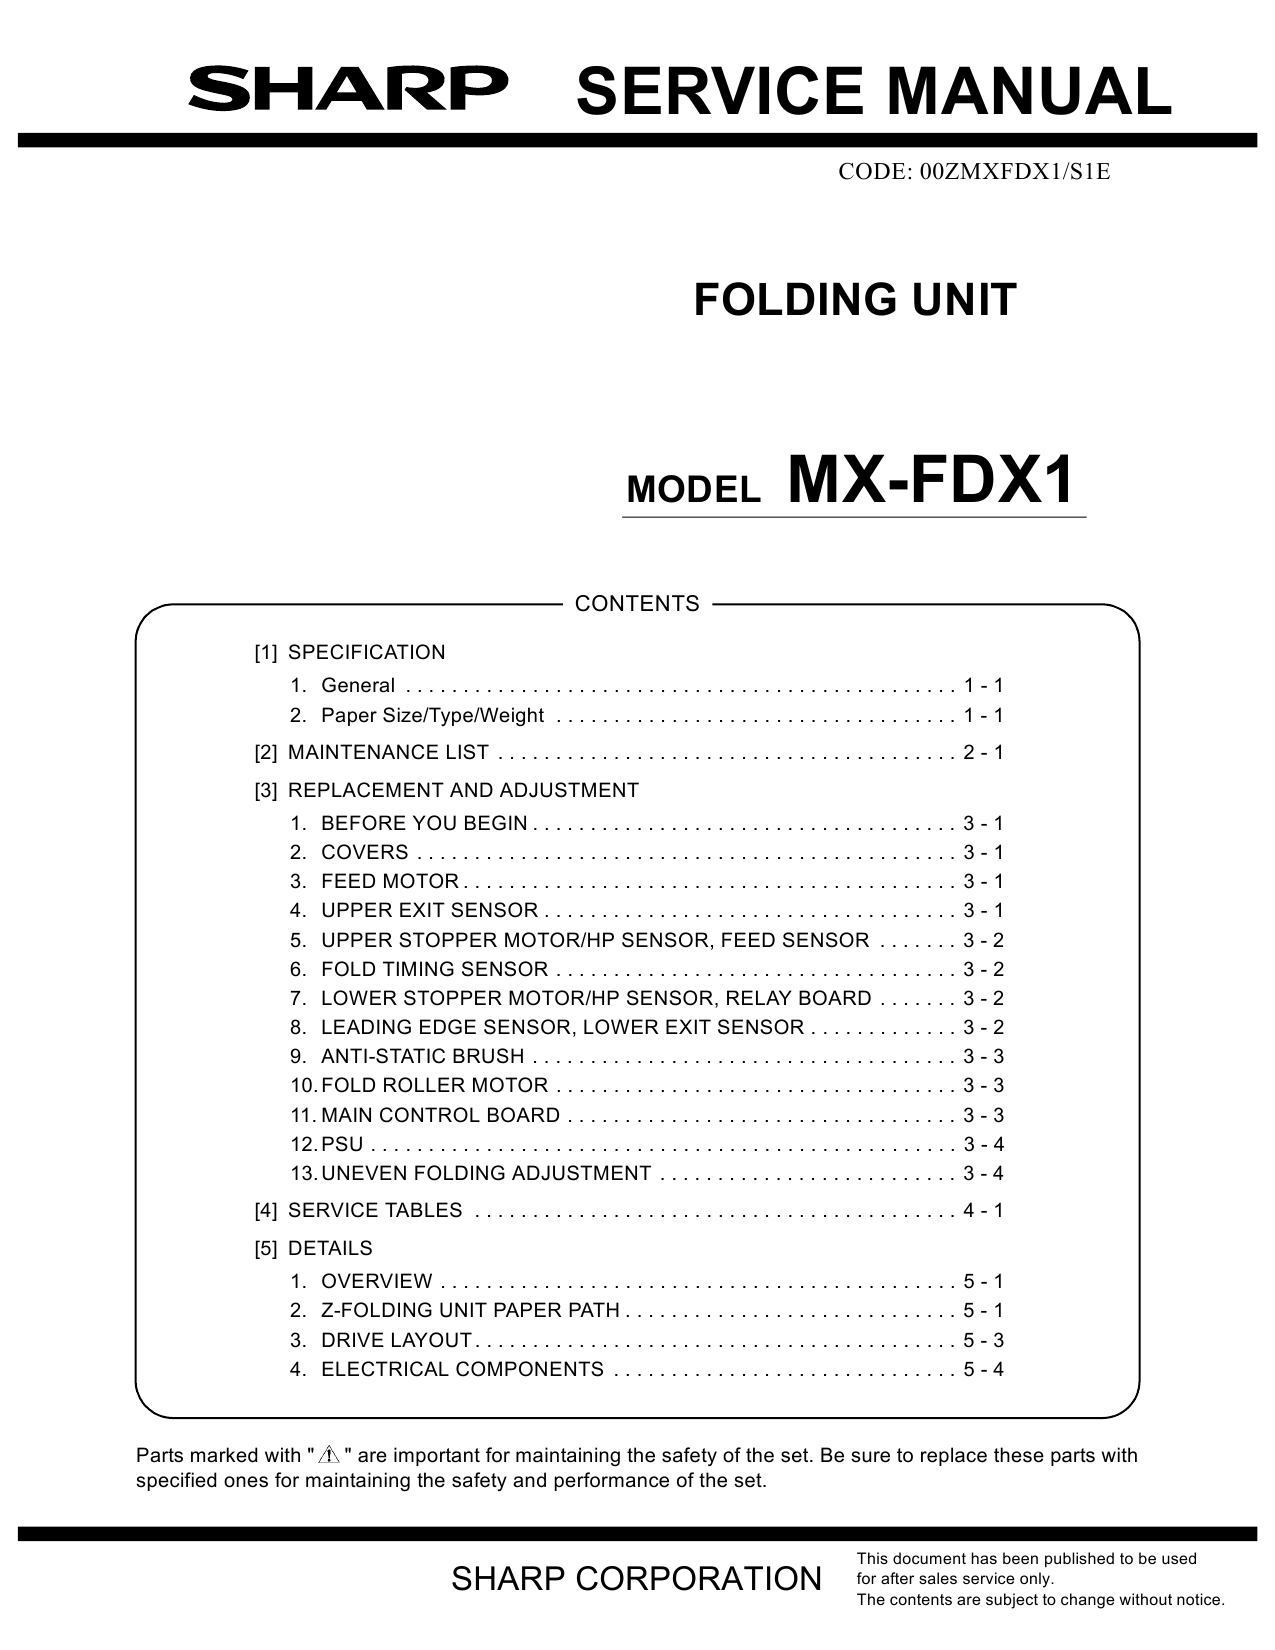 SHARP MX FDX1 Service Manual-1